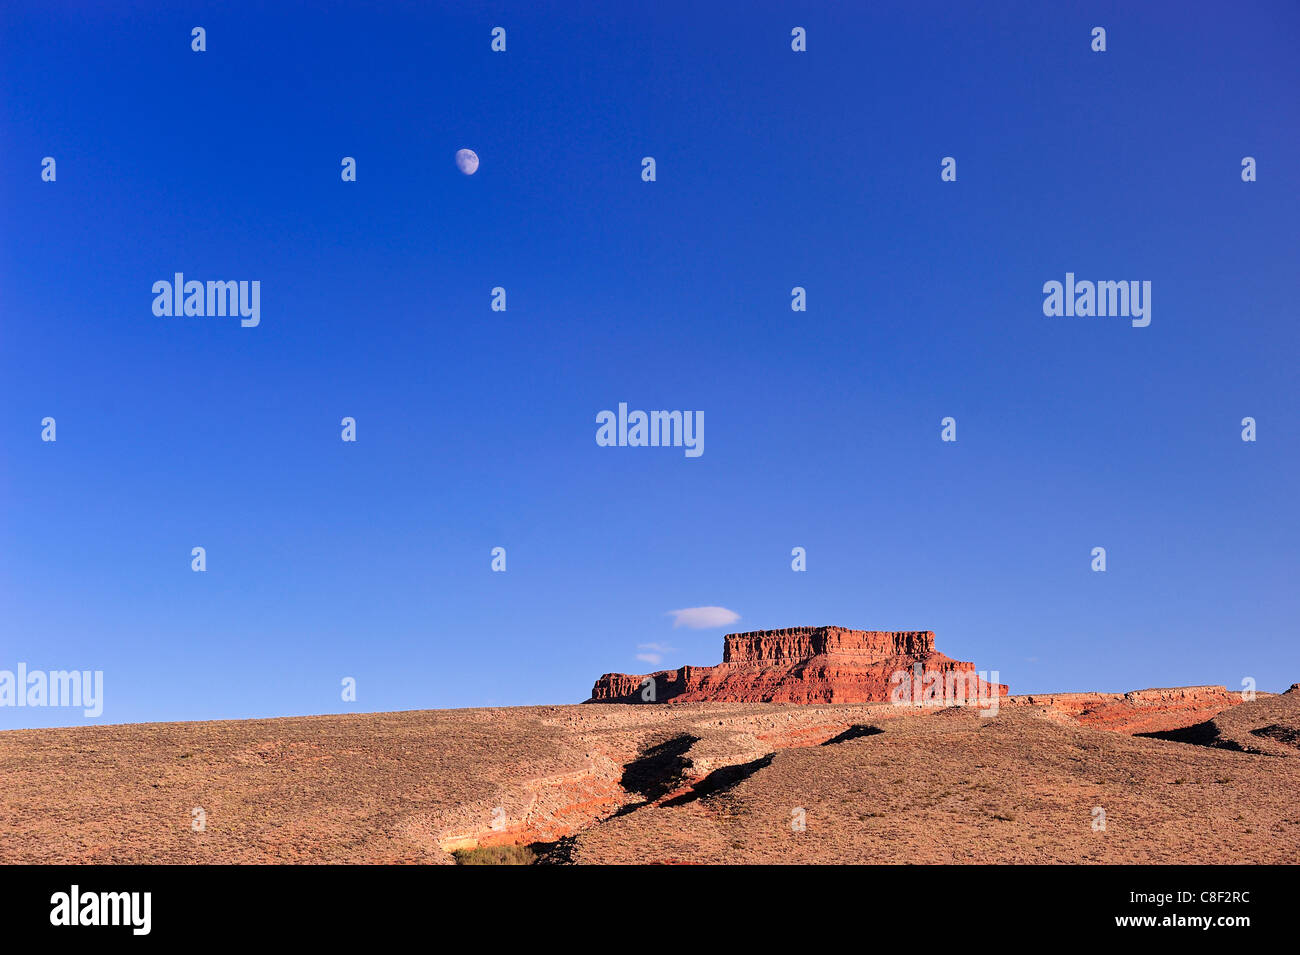 Landscapes, Cedar Mesa, near Bluff, Colorado Plateau, Utah, USA, United States, America, landscape Stock Photo